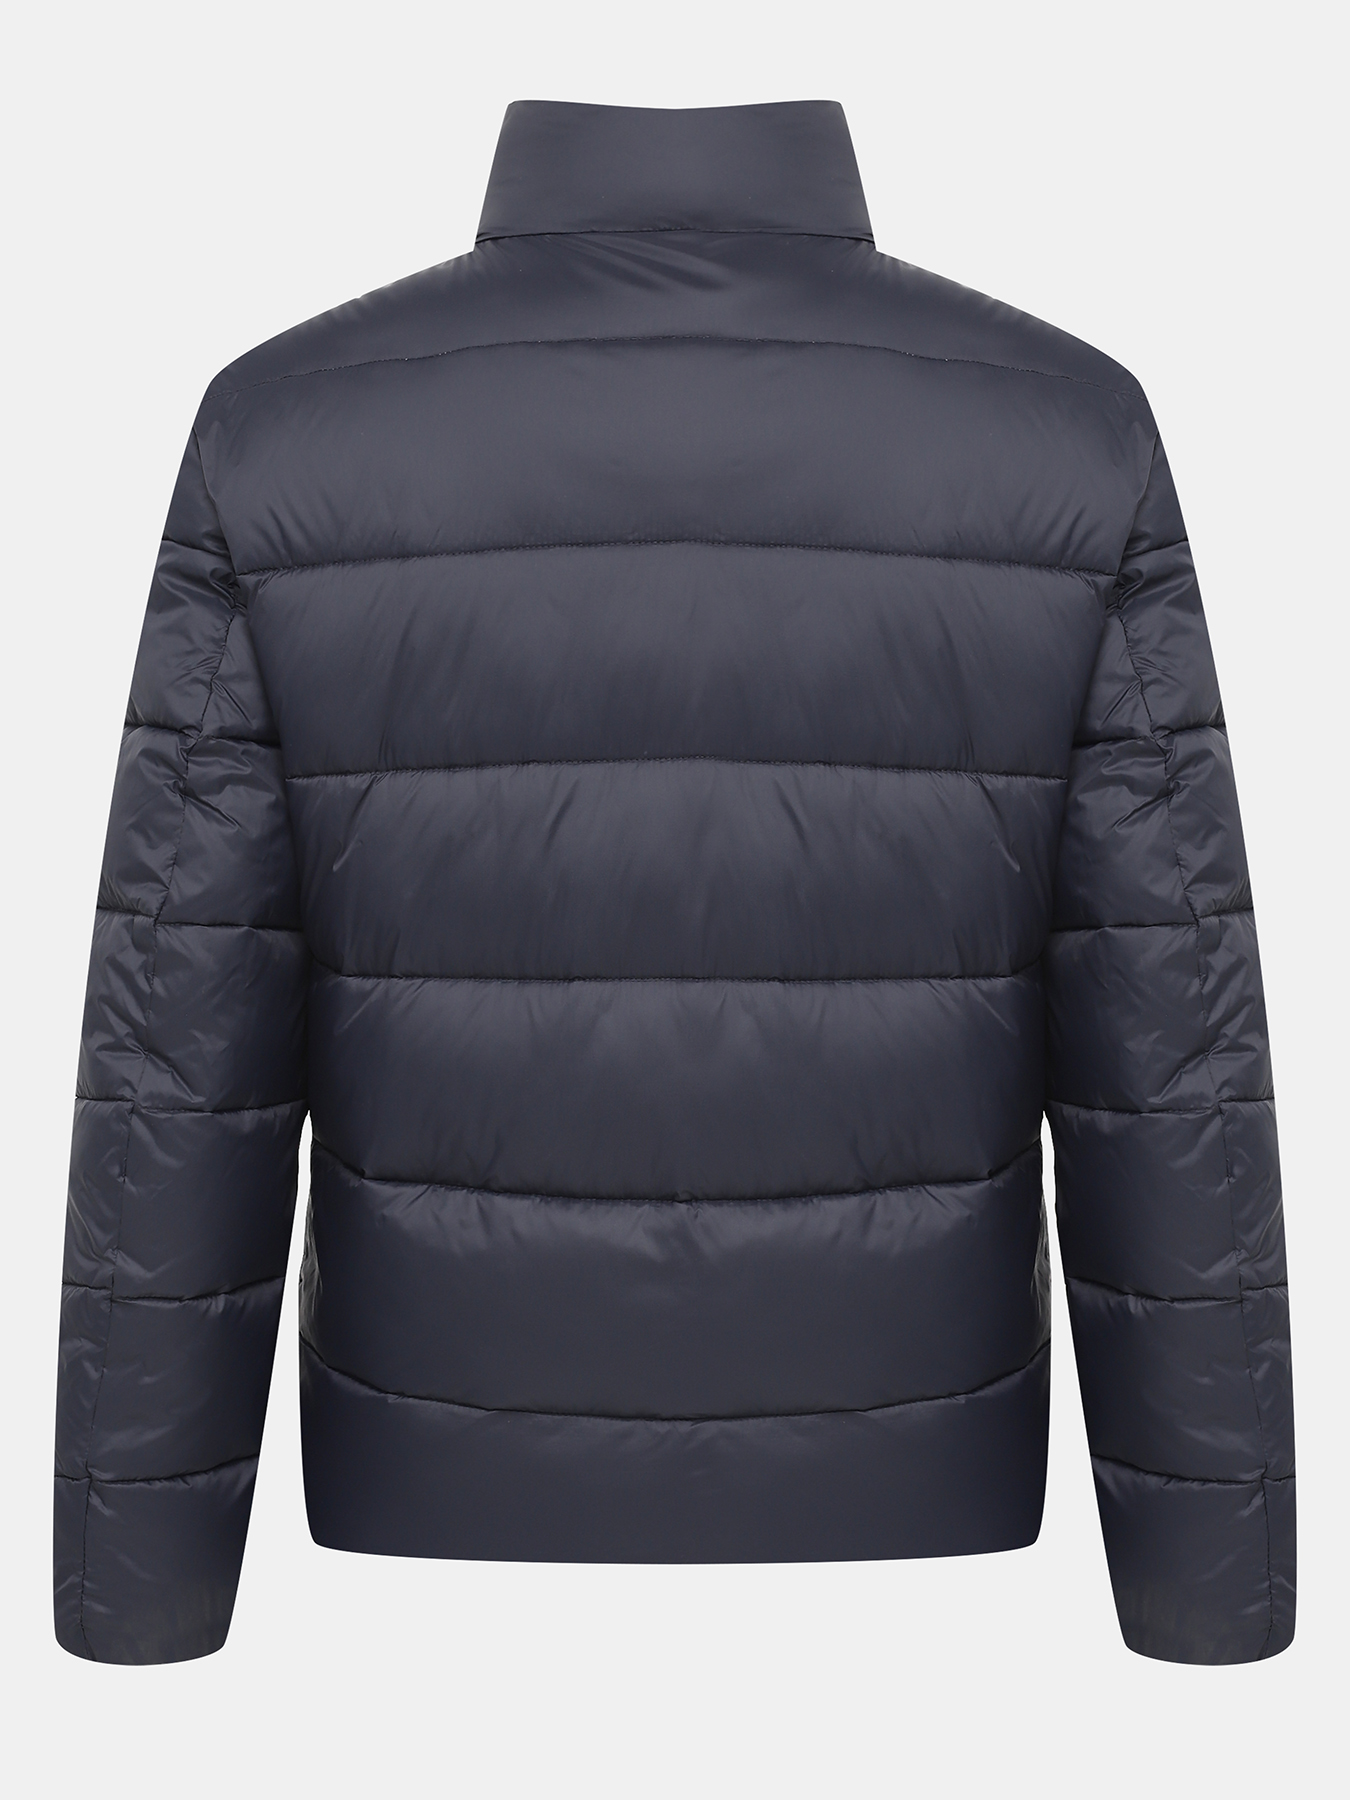 Куртка Balto HUGO 427437-045, цвет темно-синий, размер 52-54 - фото 2